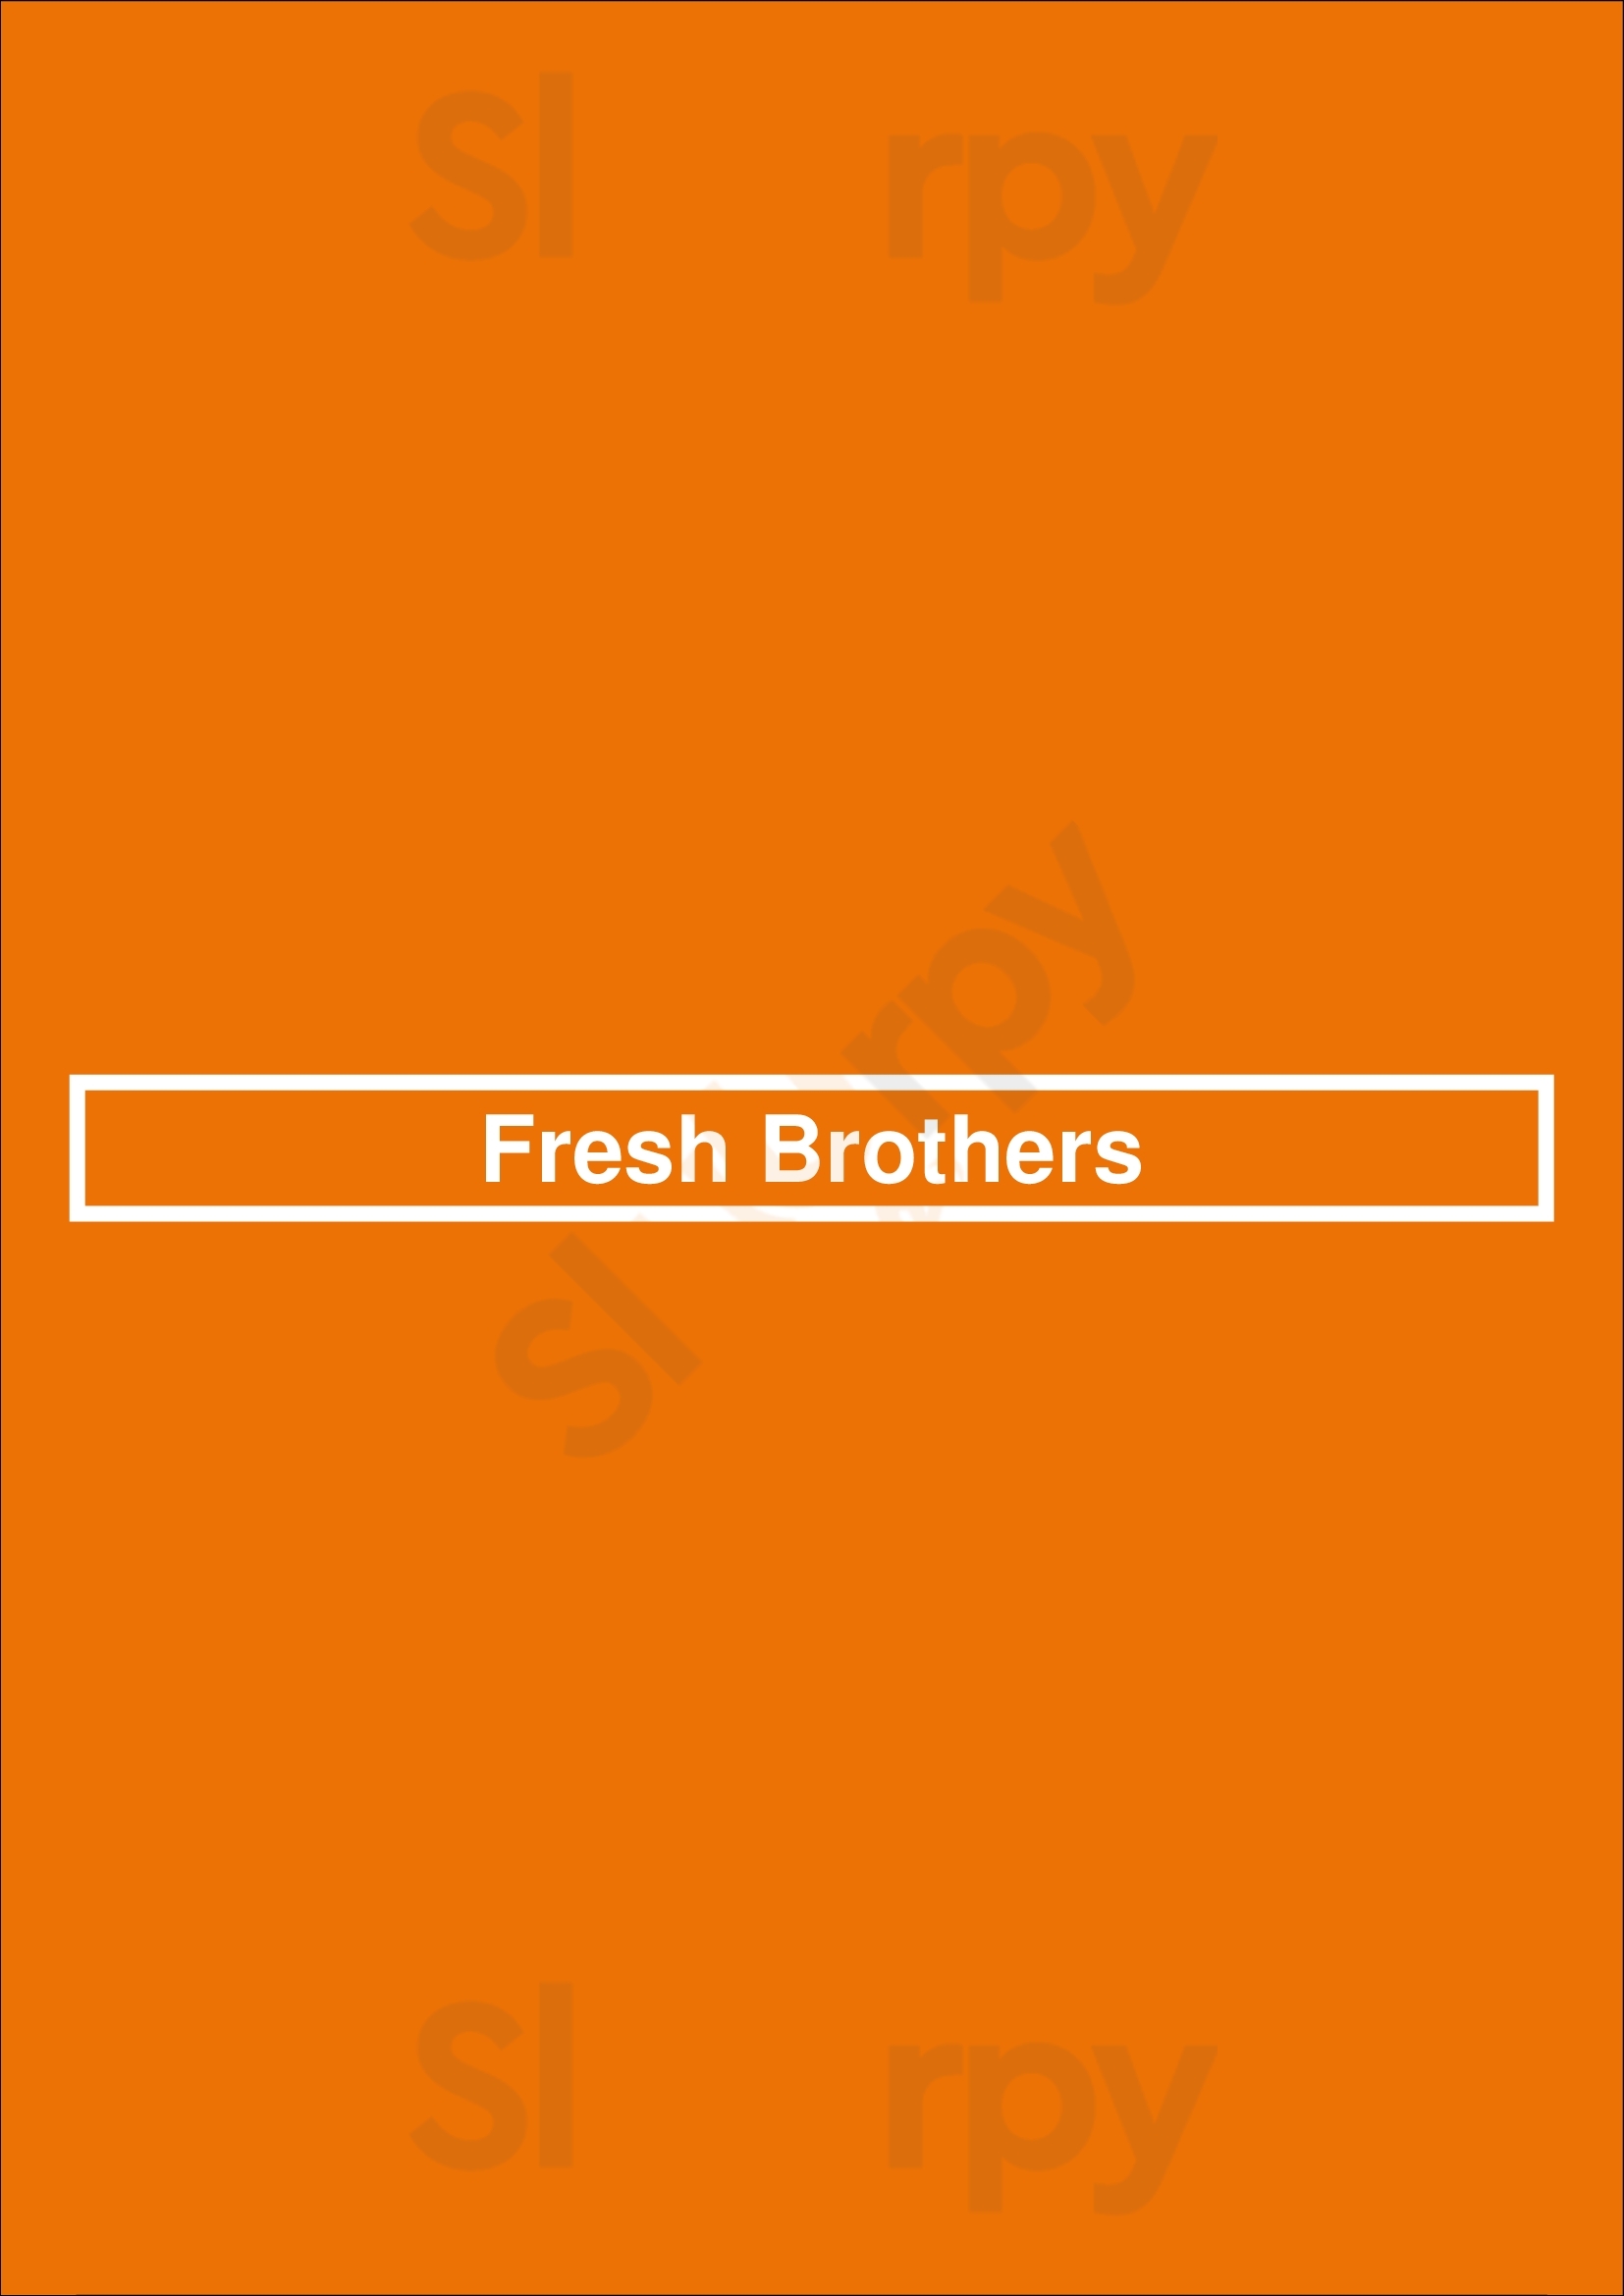 Fresh Brothers Pizza Newport Mesa Newport Beach Menu - 1